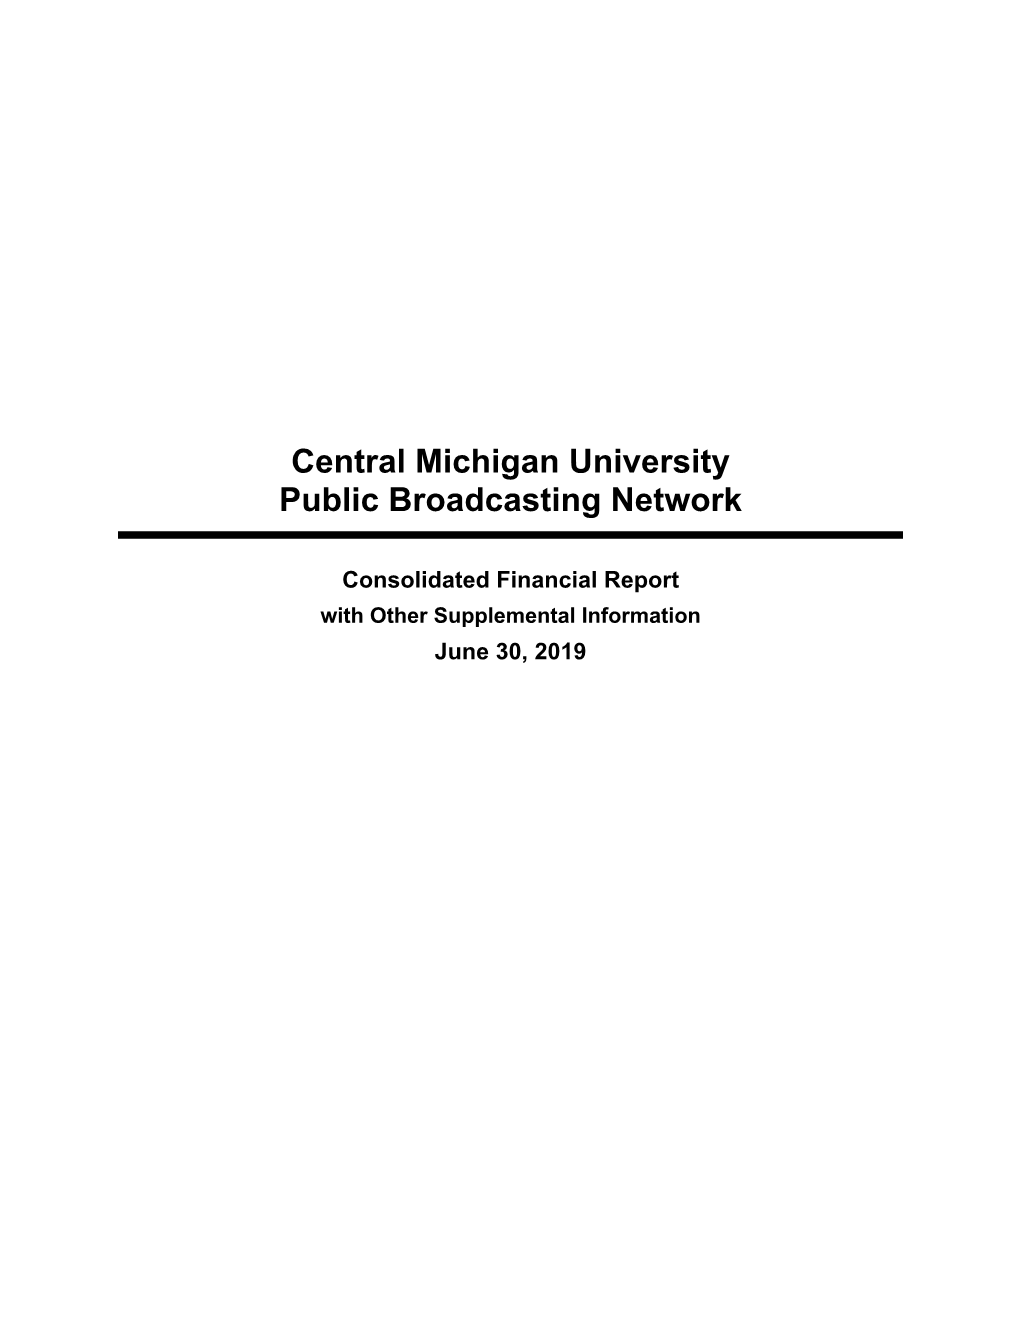 Central Michigan University Public Broadcasting Network